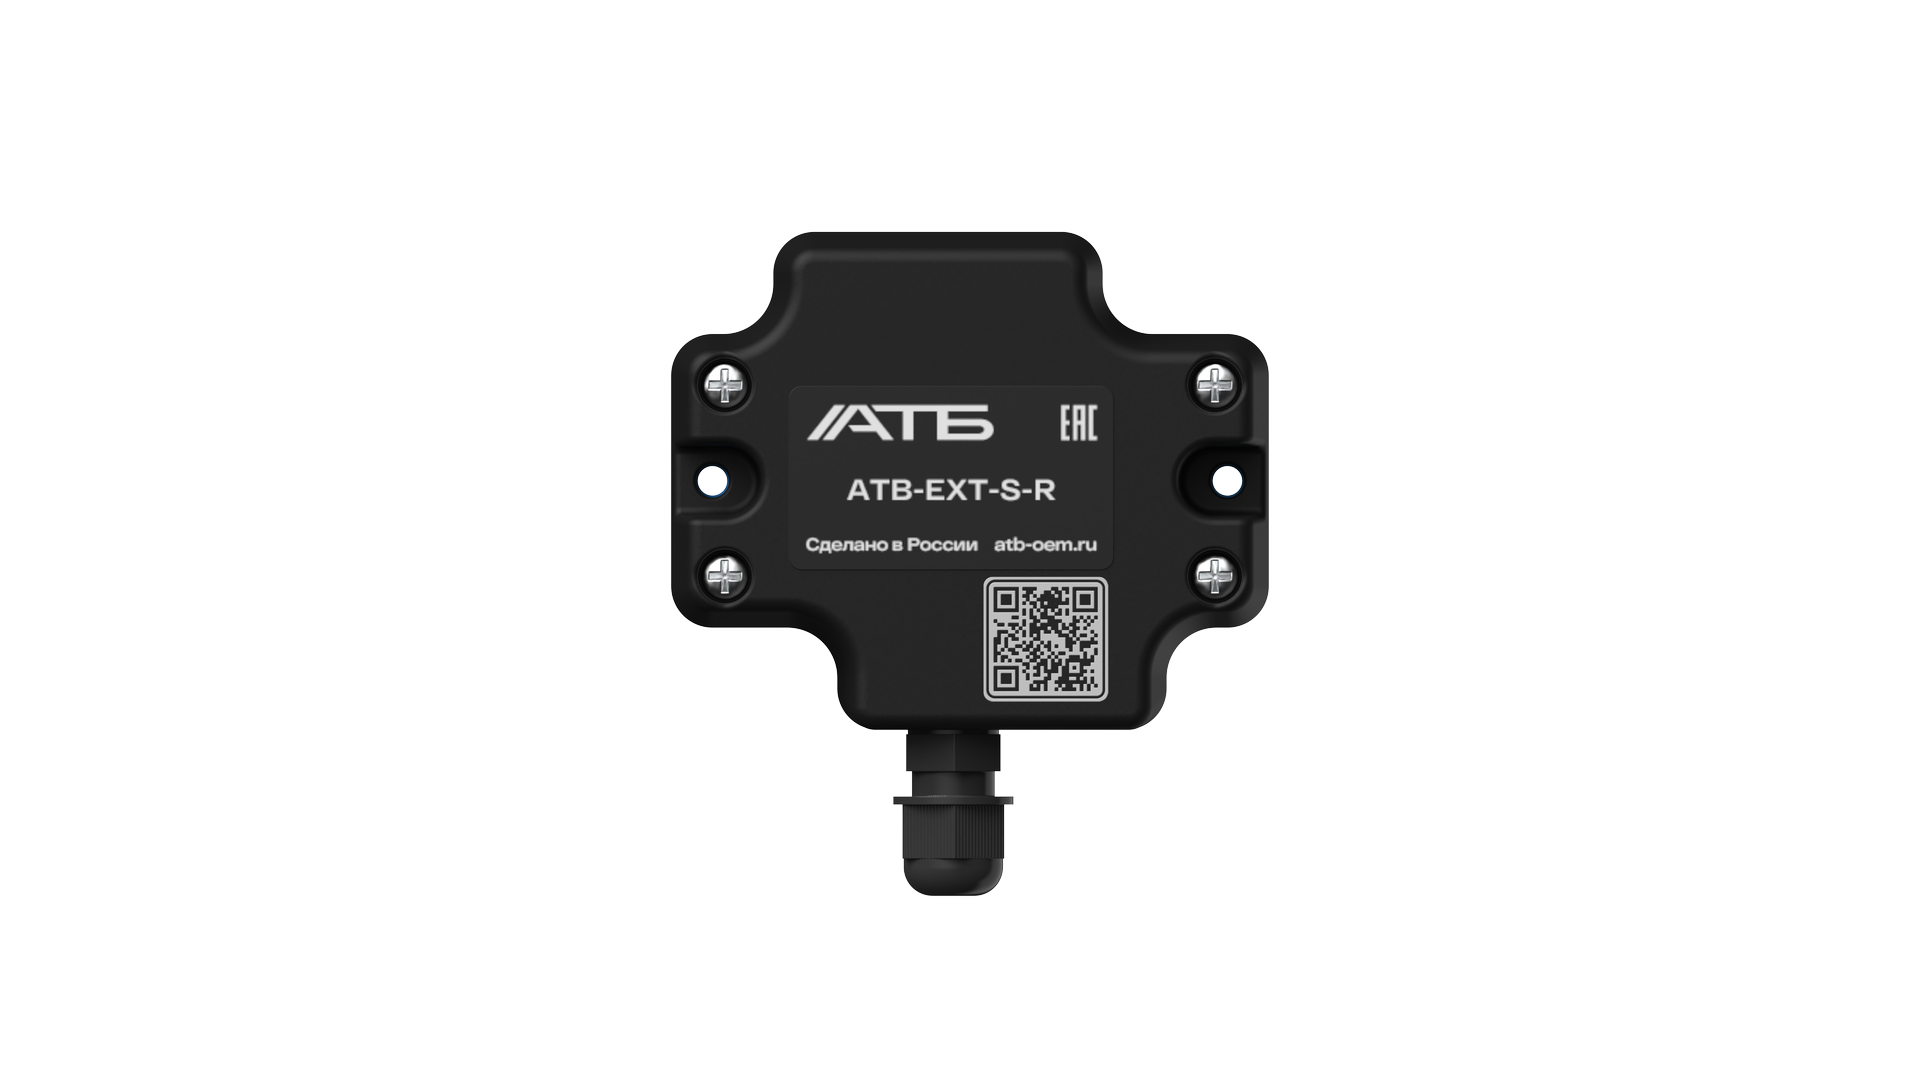 ATB-EXT-S-R Датчик радарного типа I2C